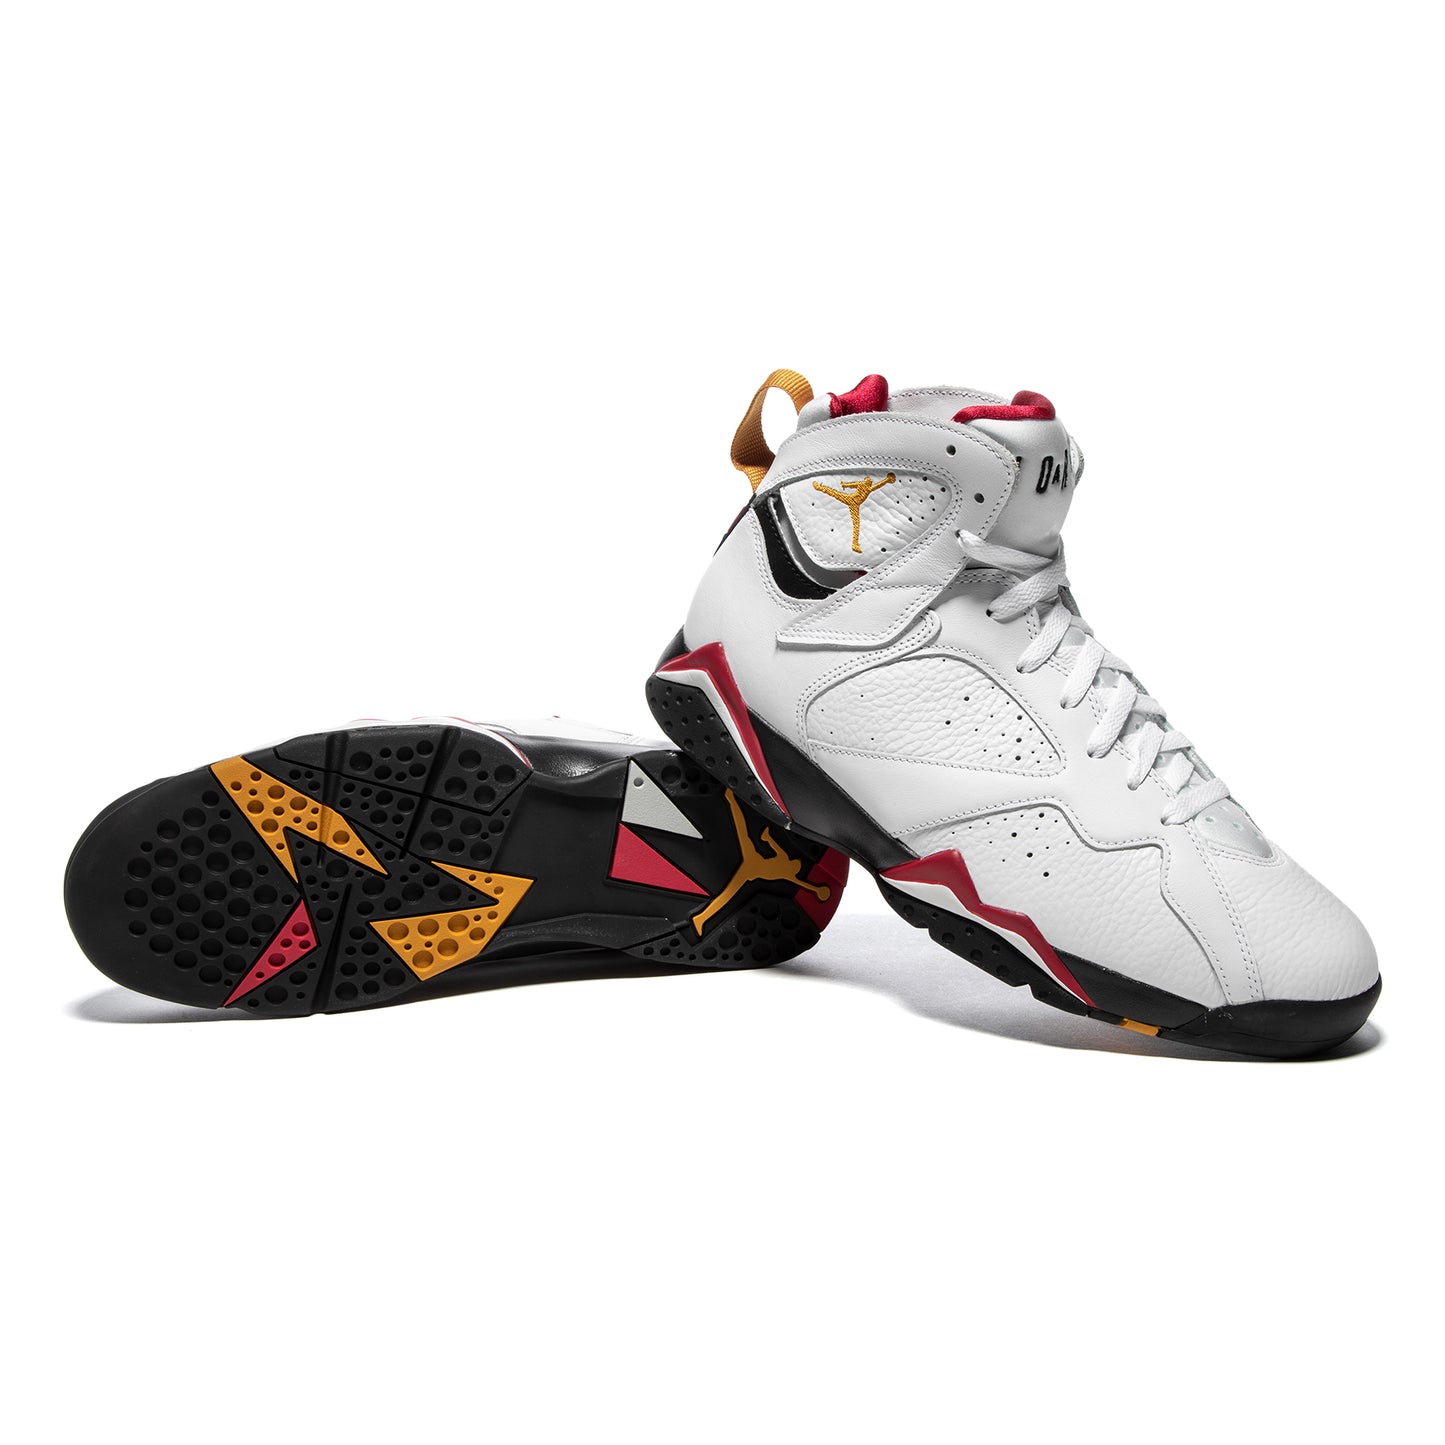 Nike Air Jordan 7 Retro (White/Black/Cardinal Red/Chutney)